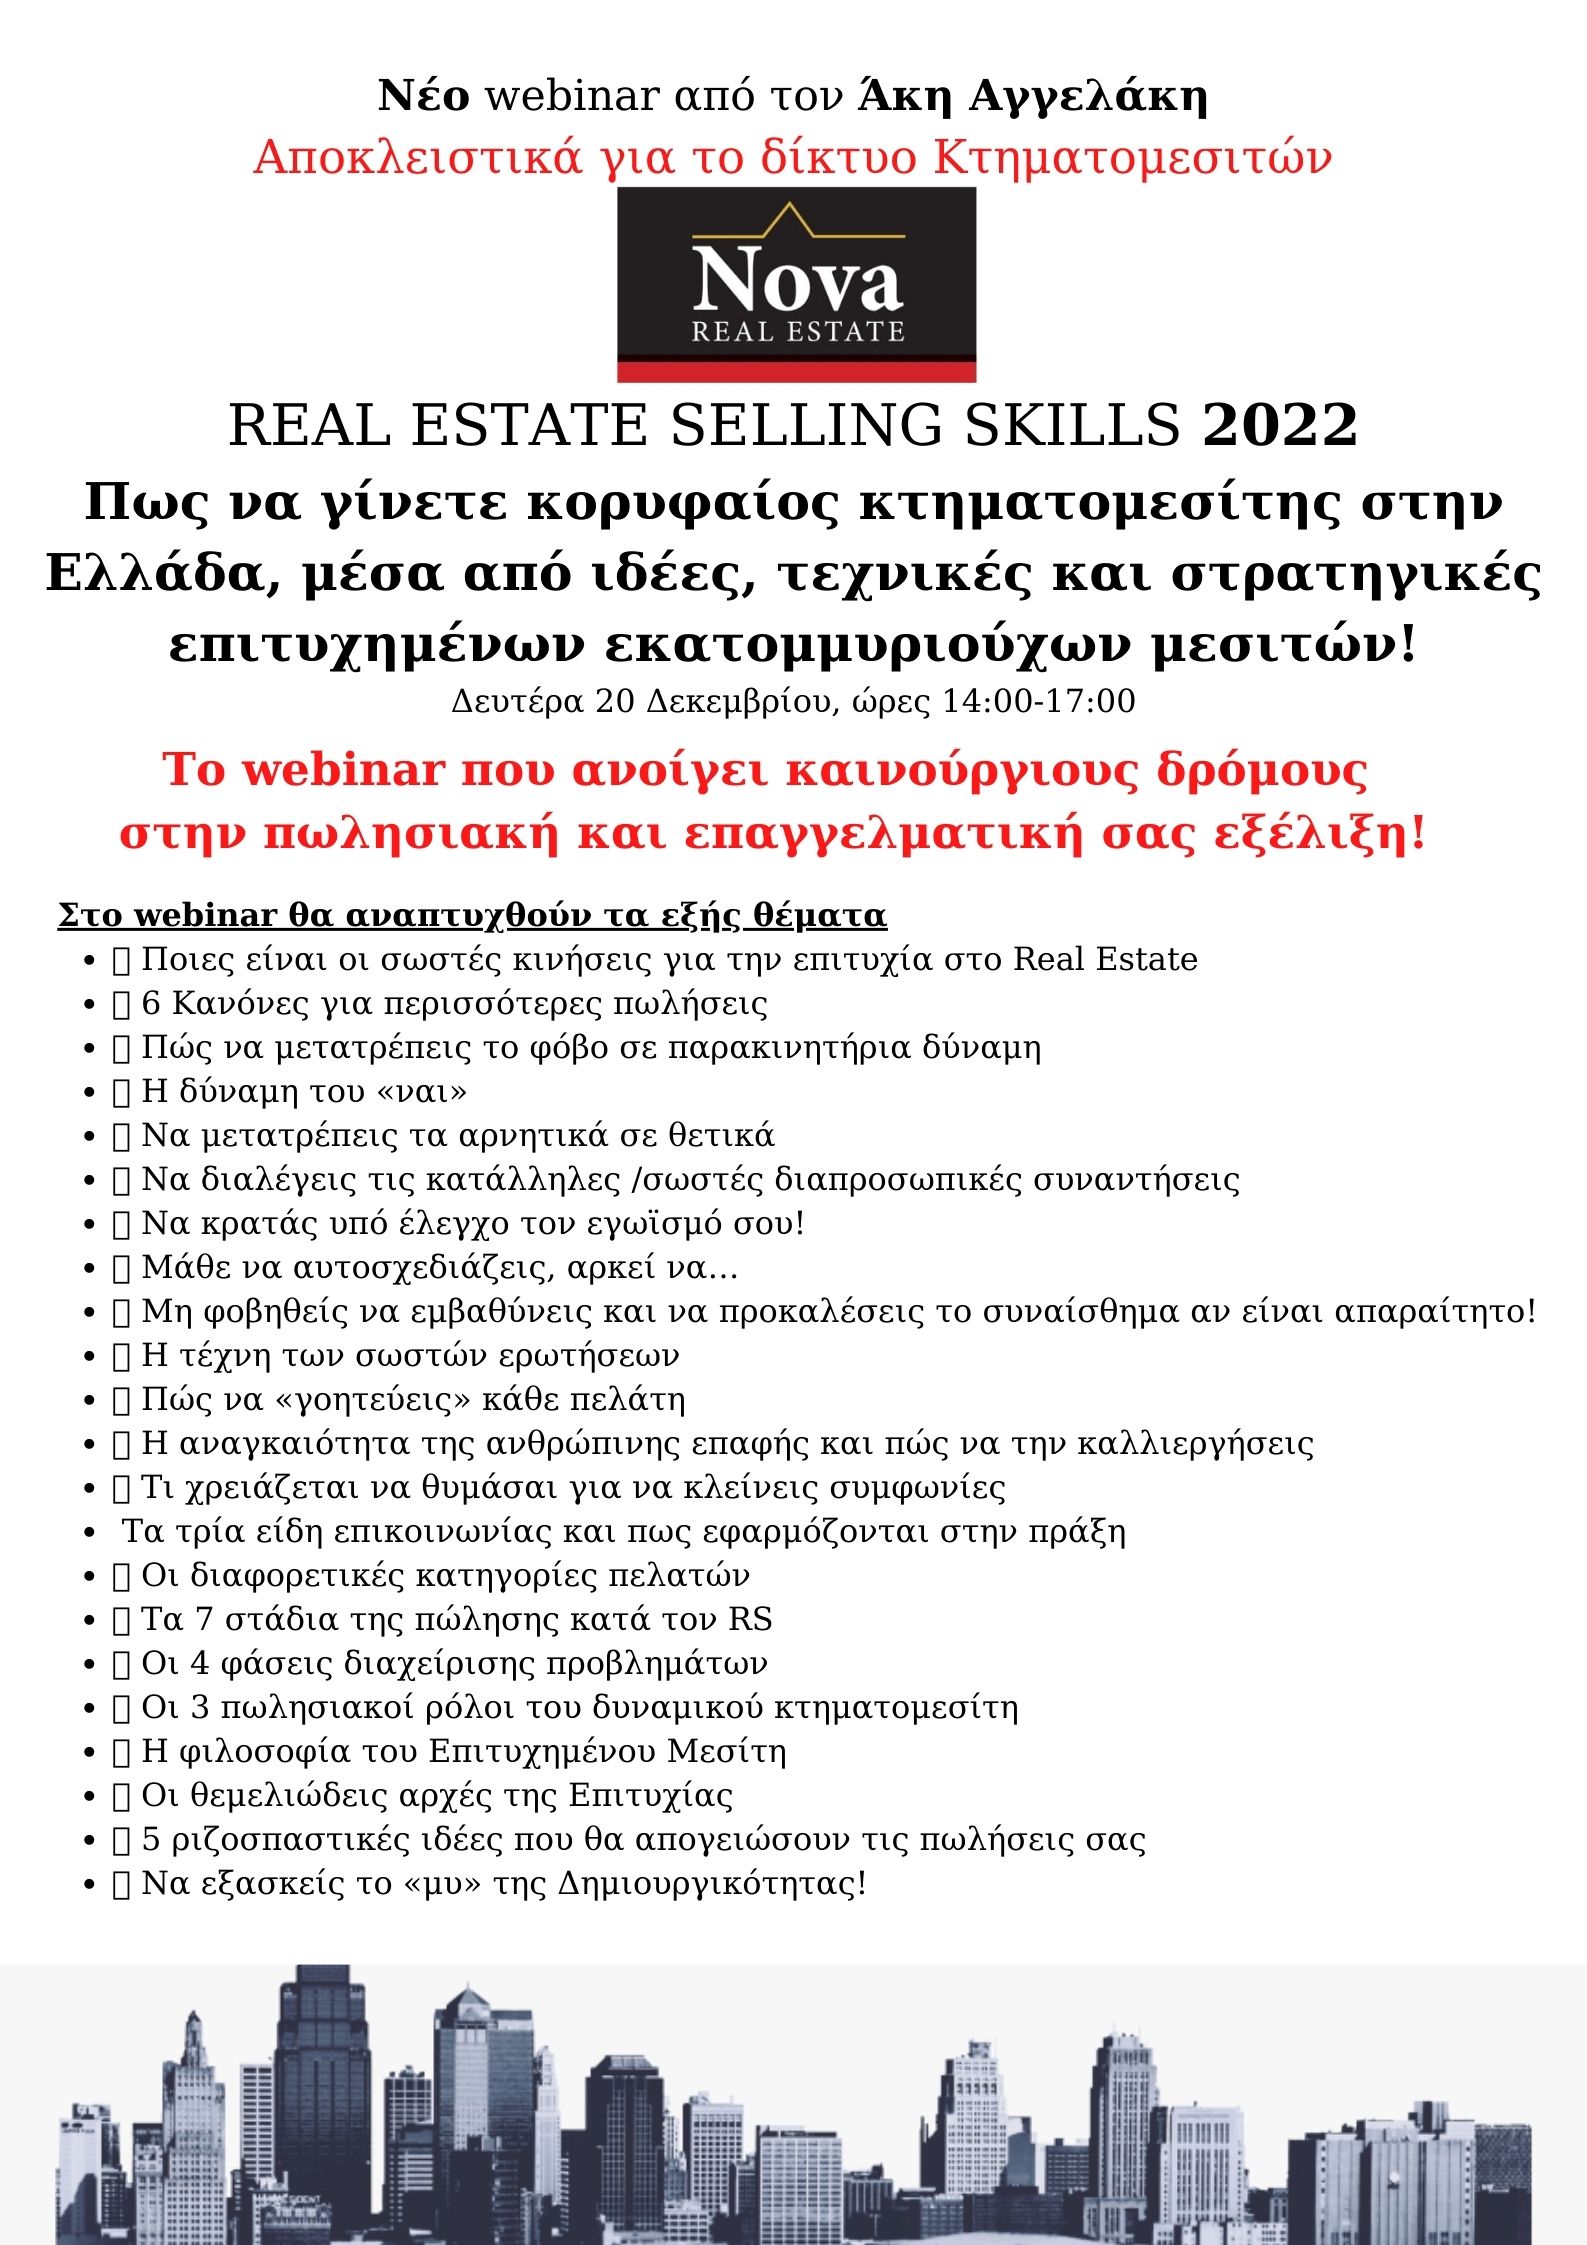 Real Estate Selling Skills 2022 για λογαριασμό της NOVA REAL ESTATE